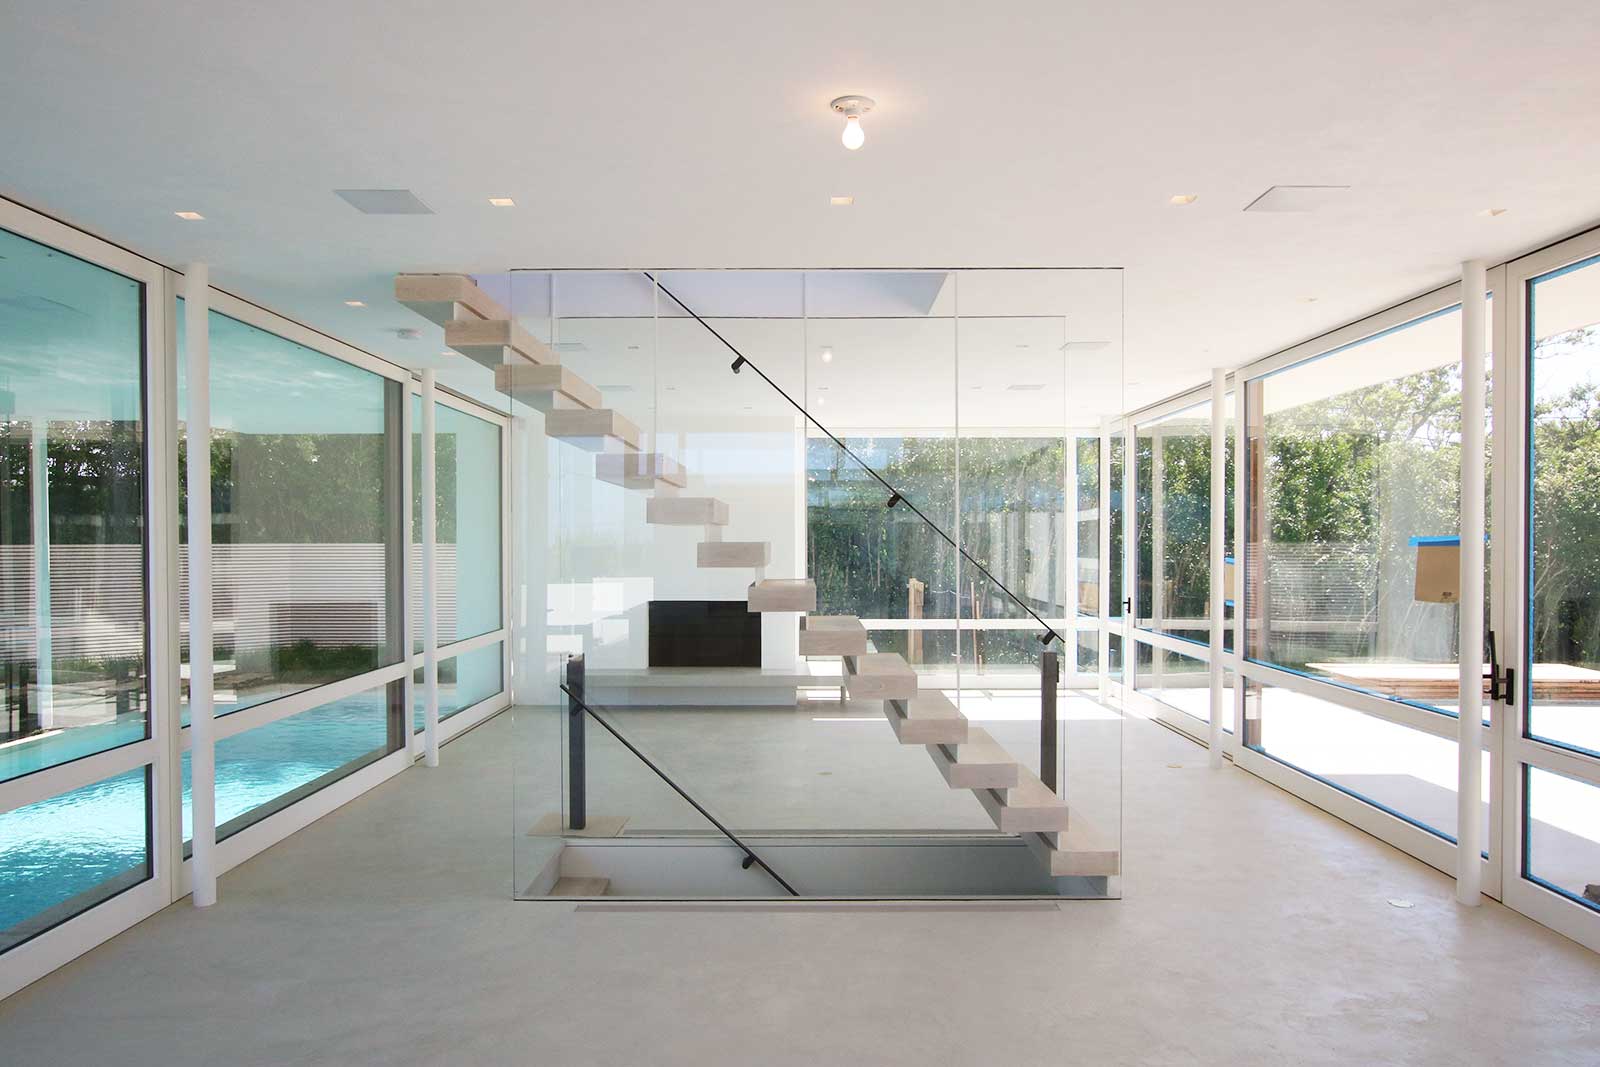 04-res4-resolution-4-architecture-modern-home-surfside-residence-renovation-living-stair.jpg